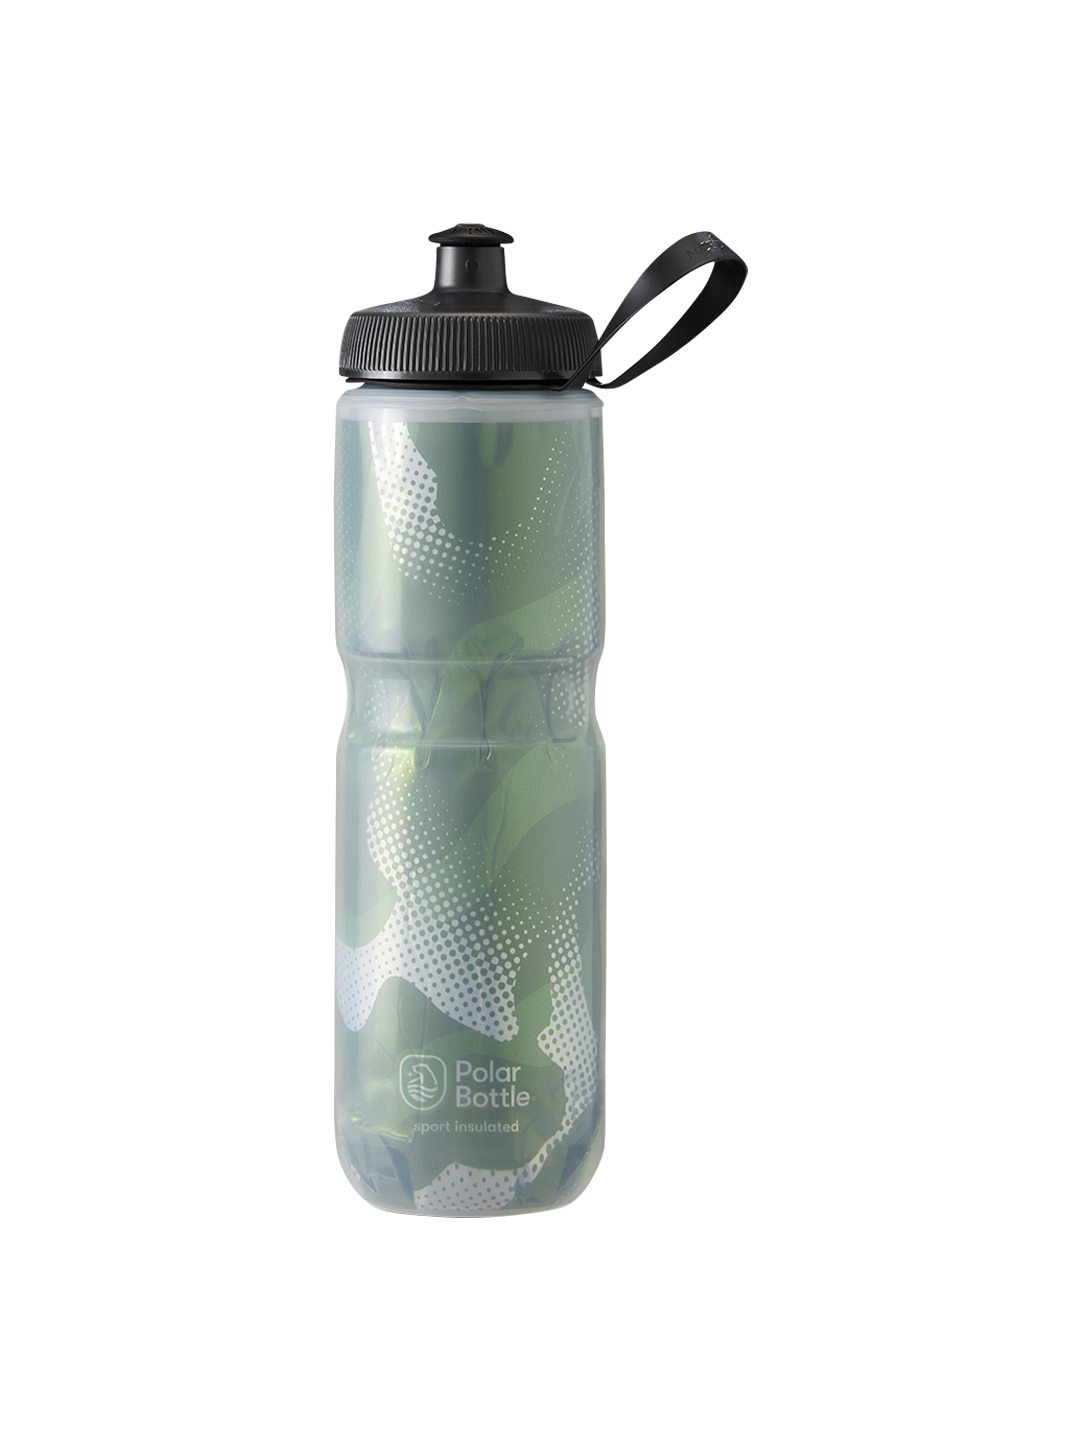 bontrager water bottle